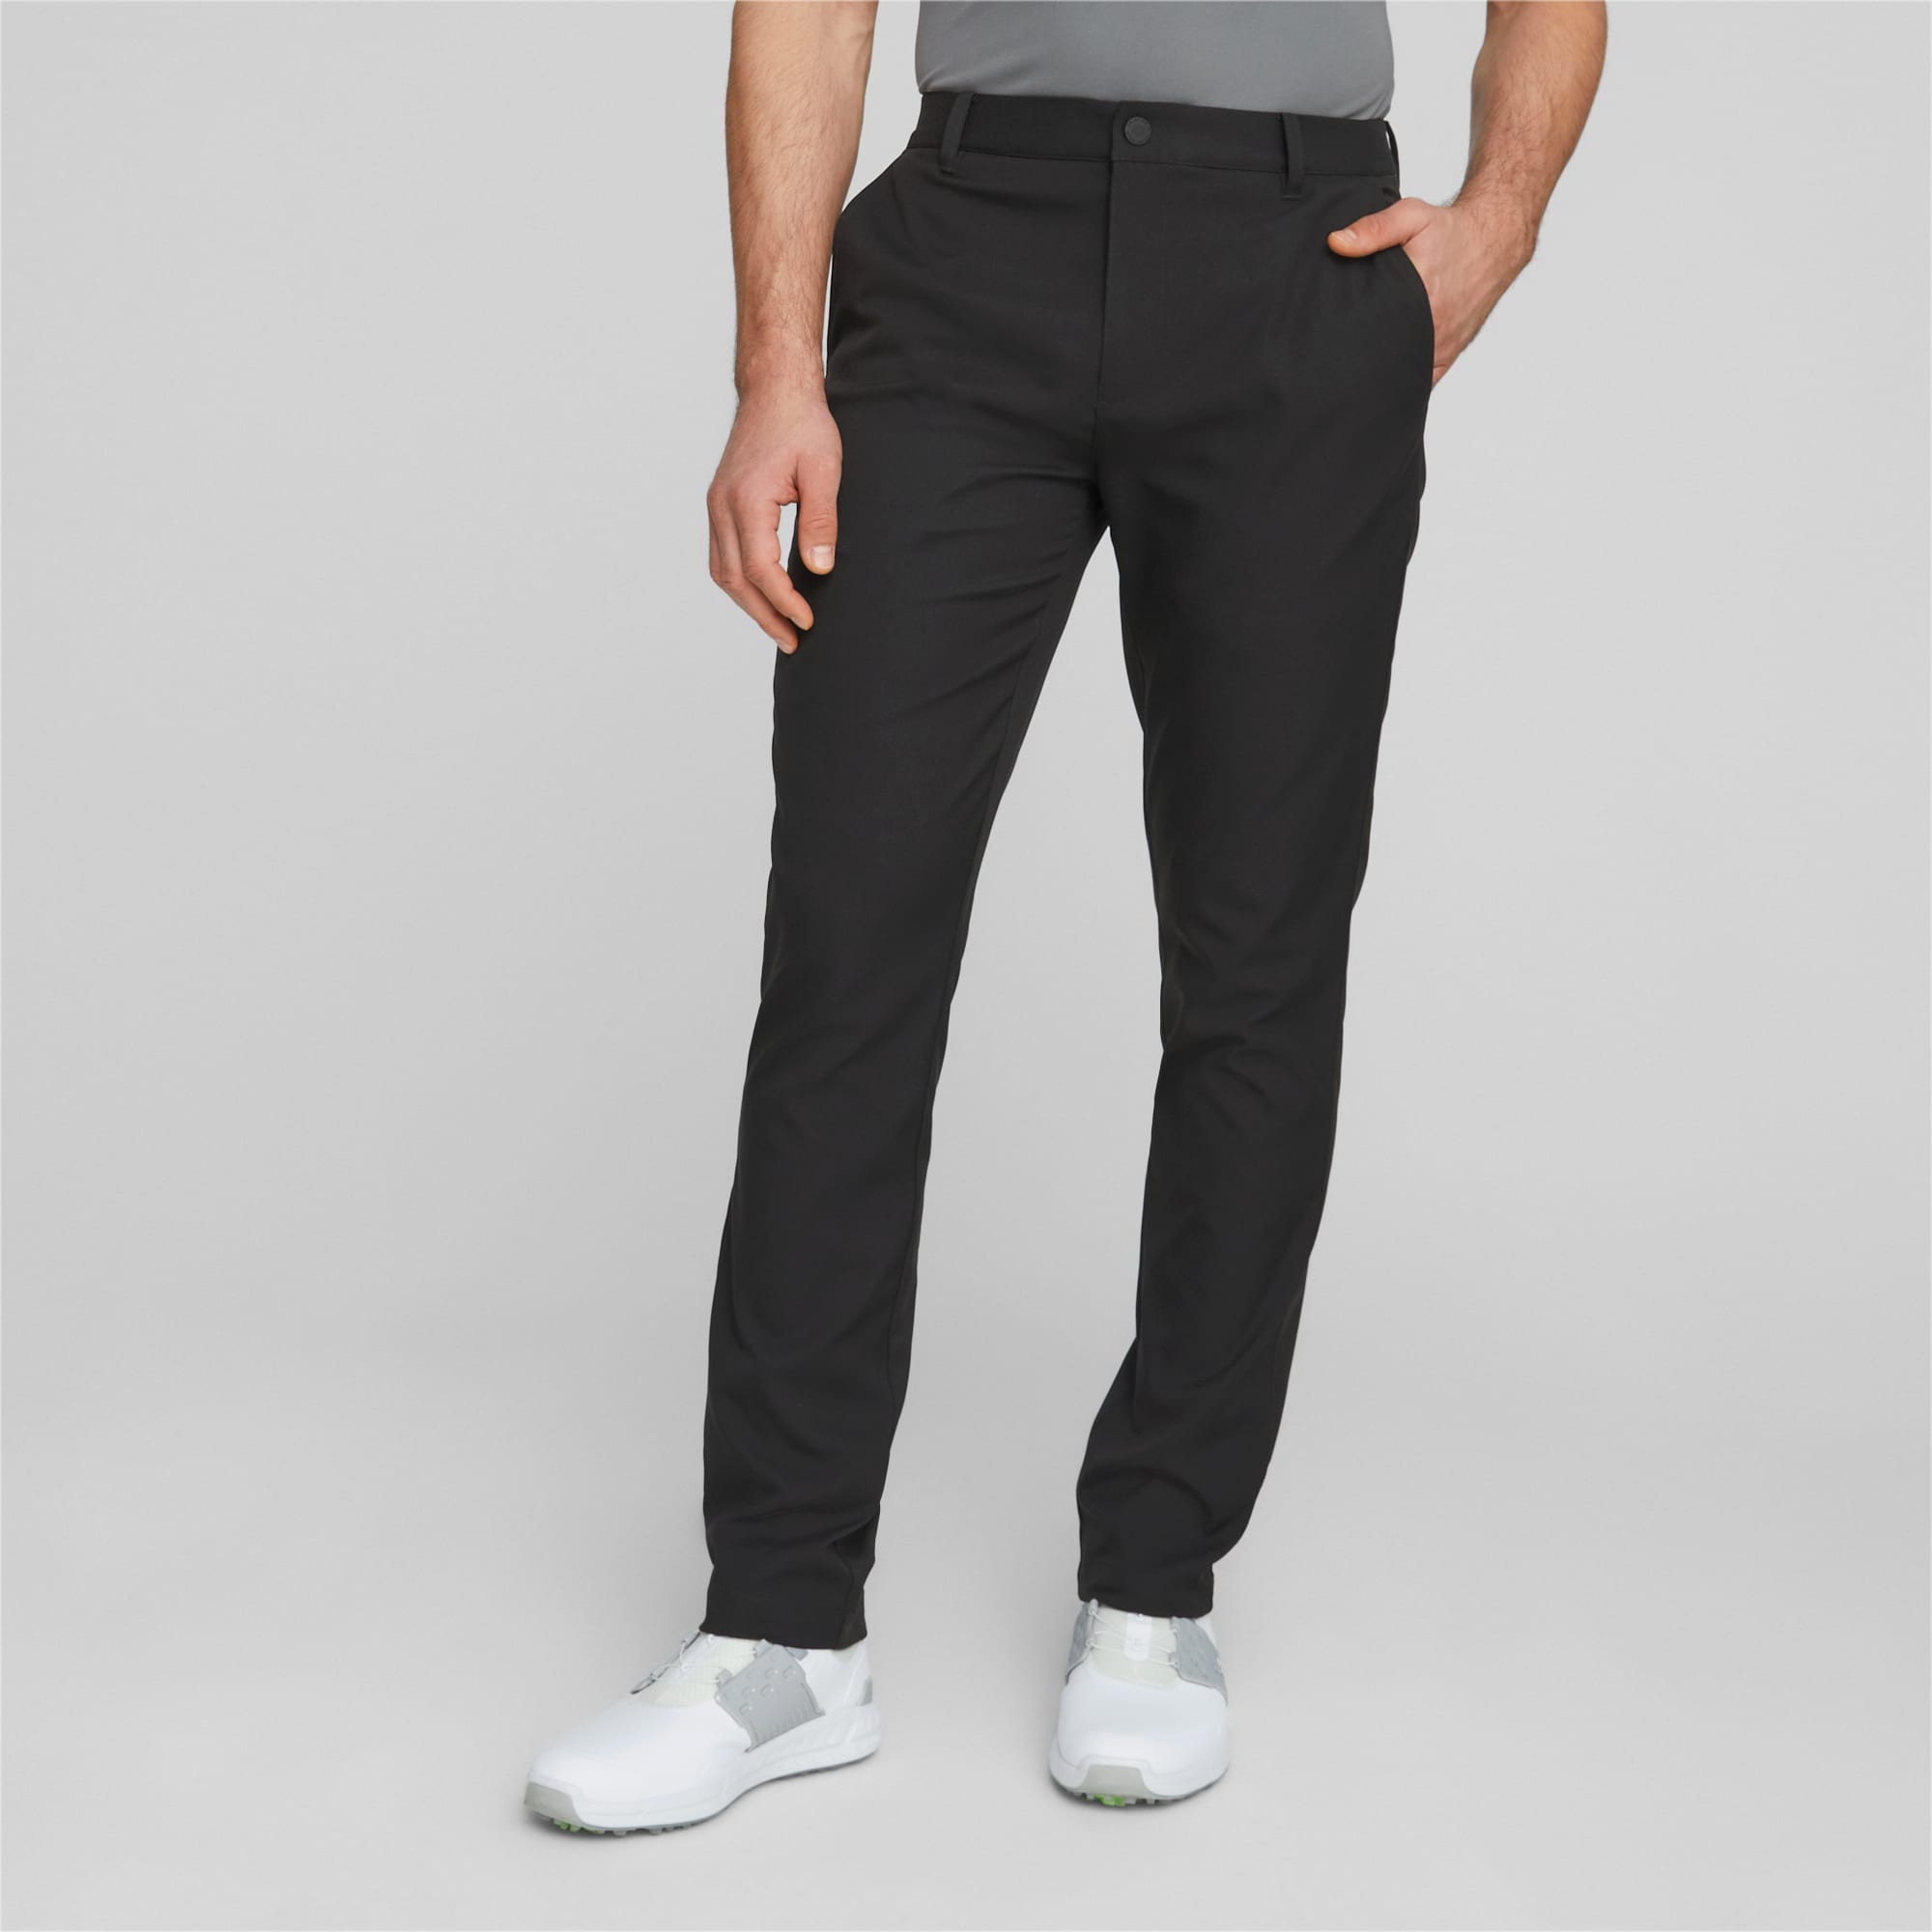 PUMA Dealer Tailored Golf Pants Men, Black, Size 40/36, Clothing